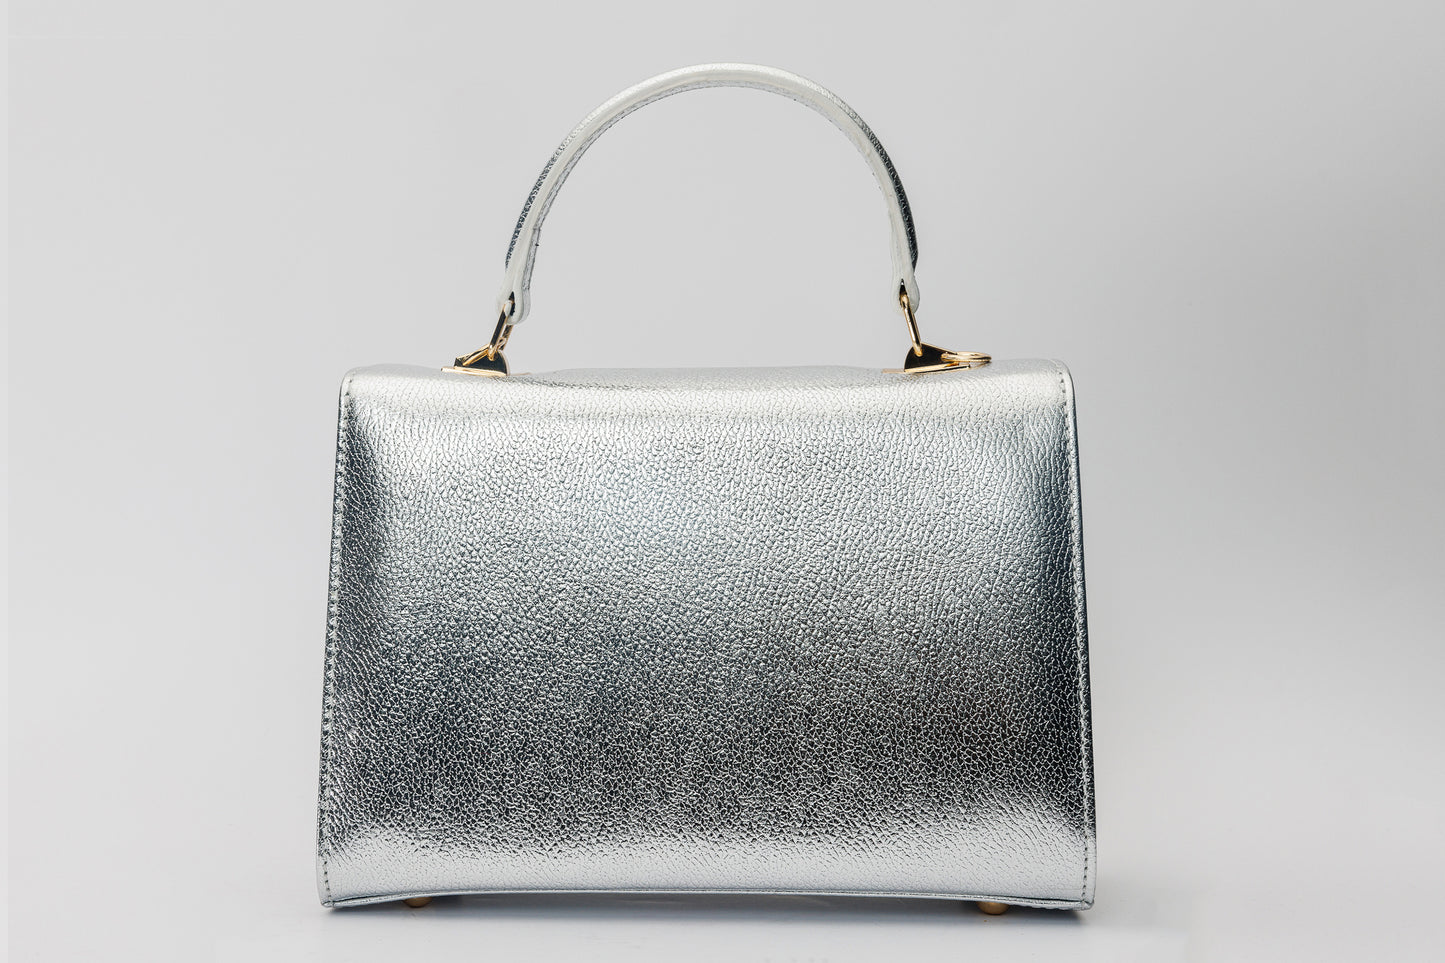 The Ege Silver Leather Handbag